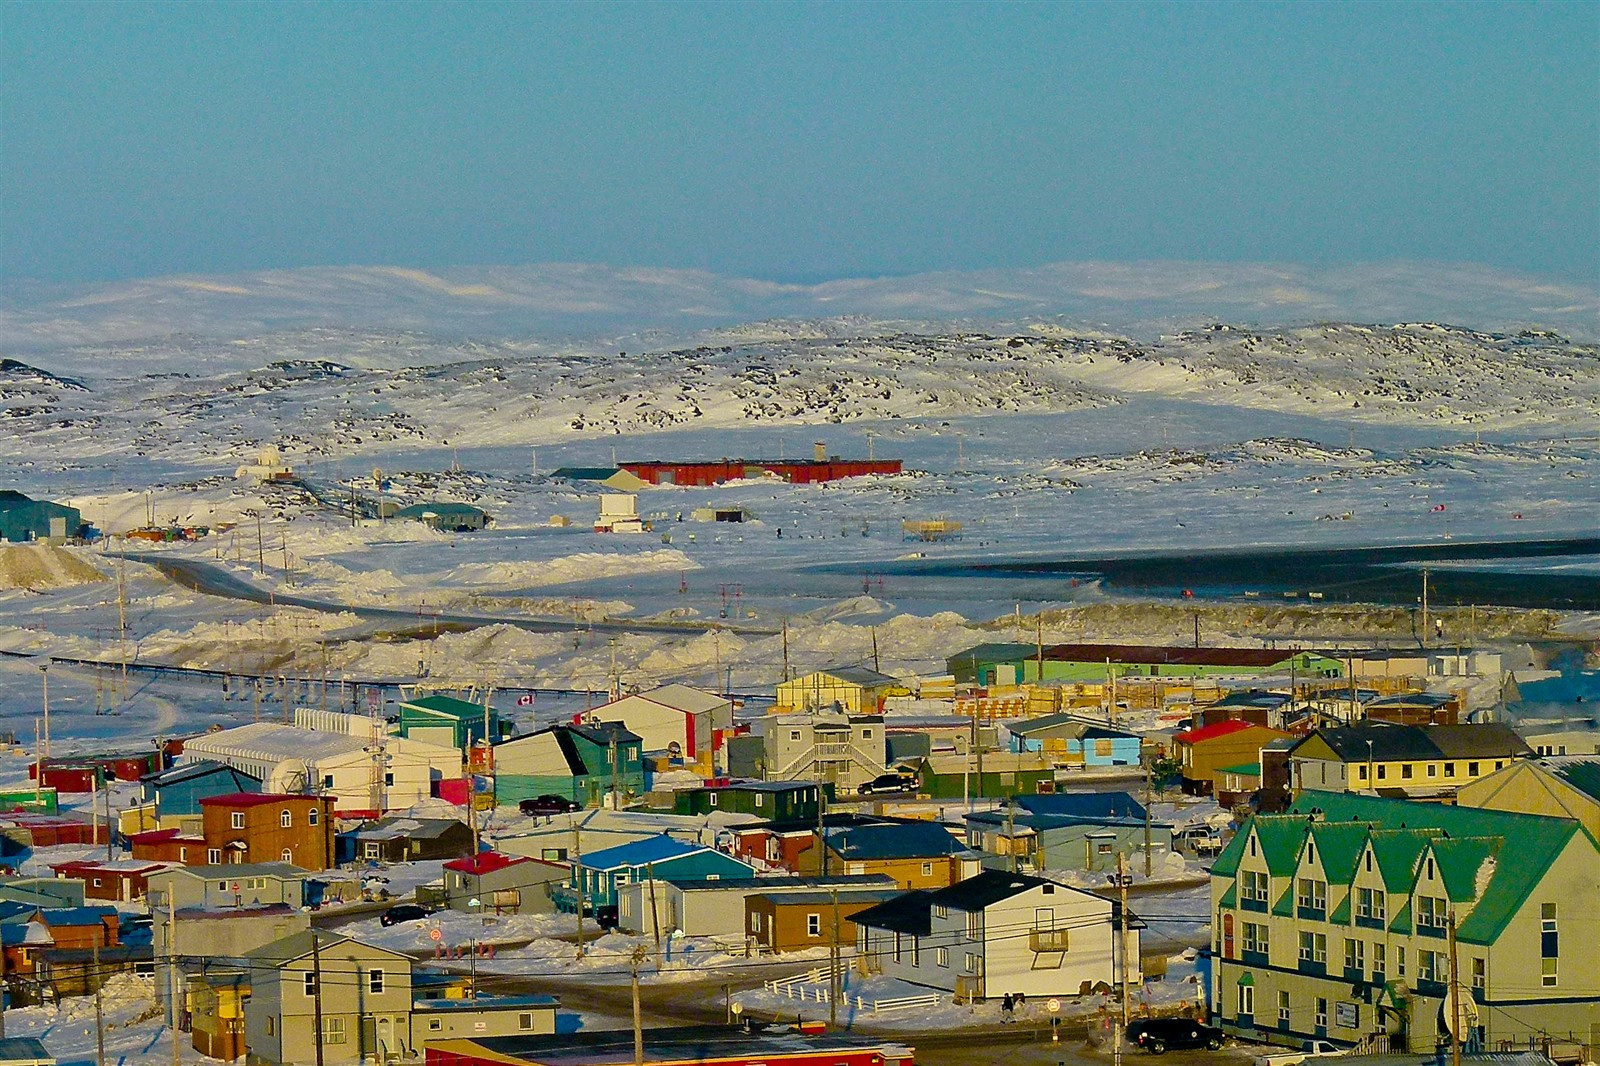 WE9G/VY0 Iqaluit, Canada